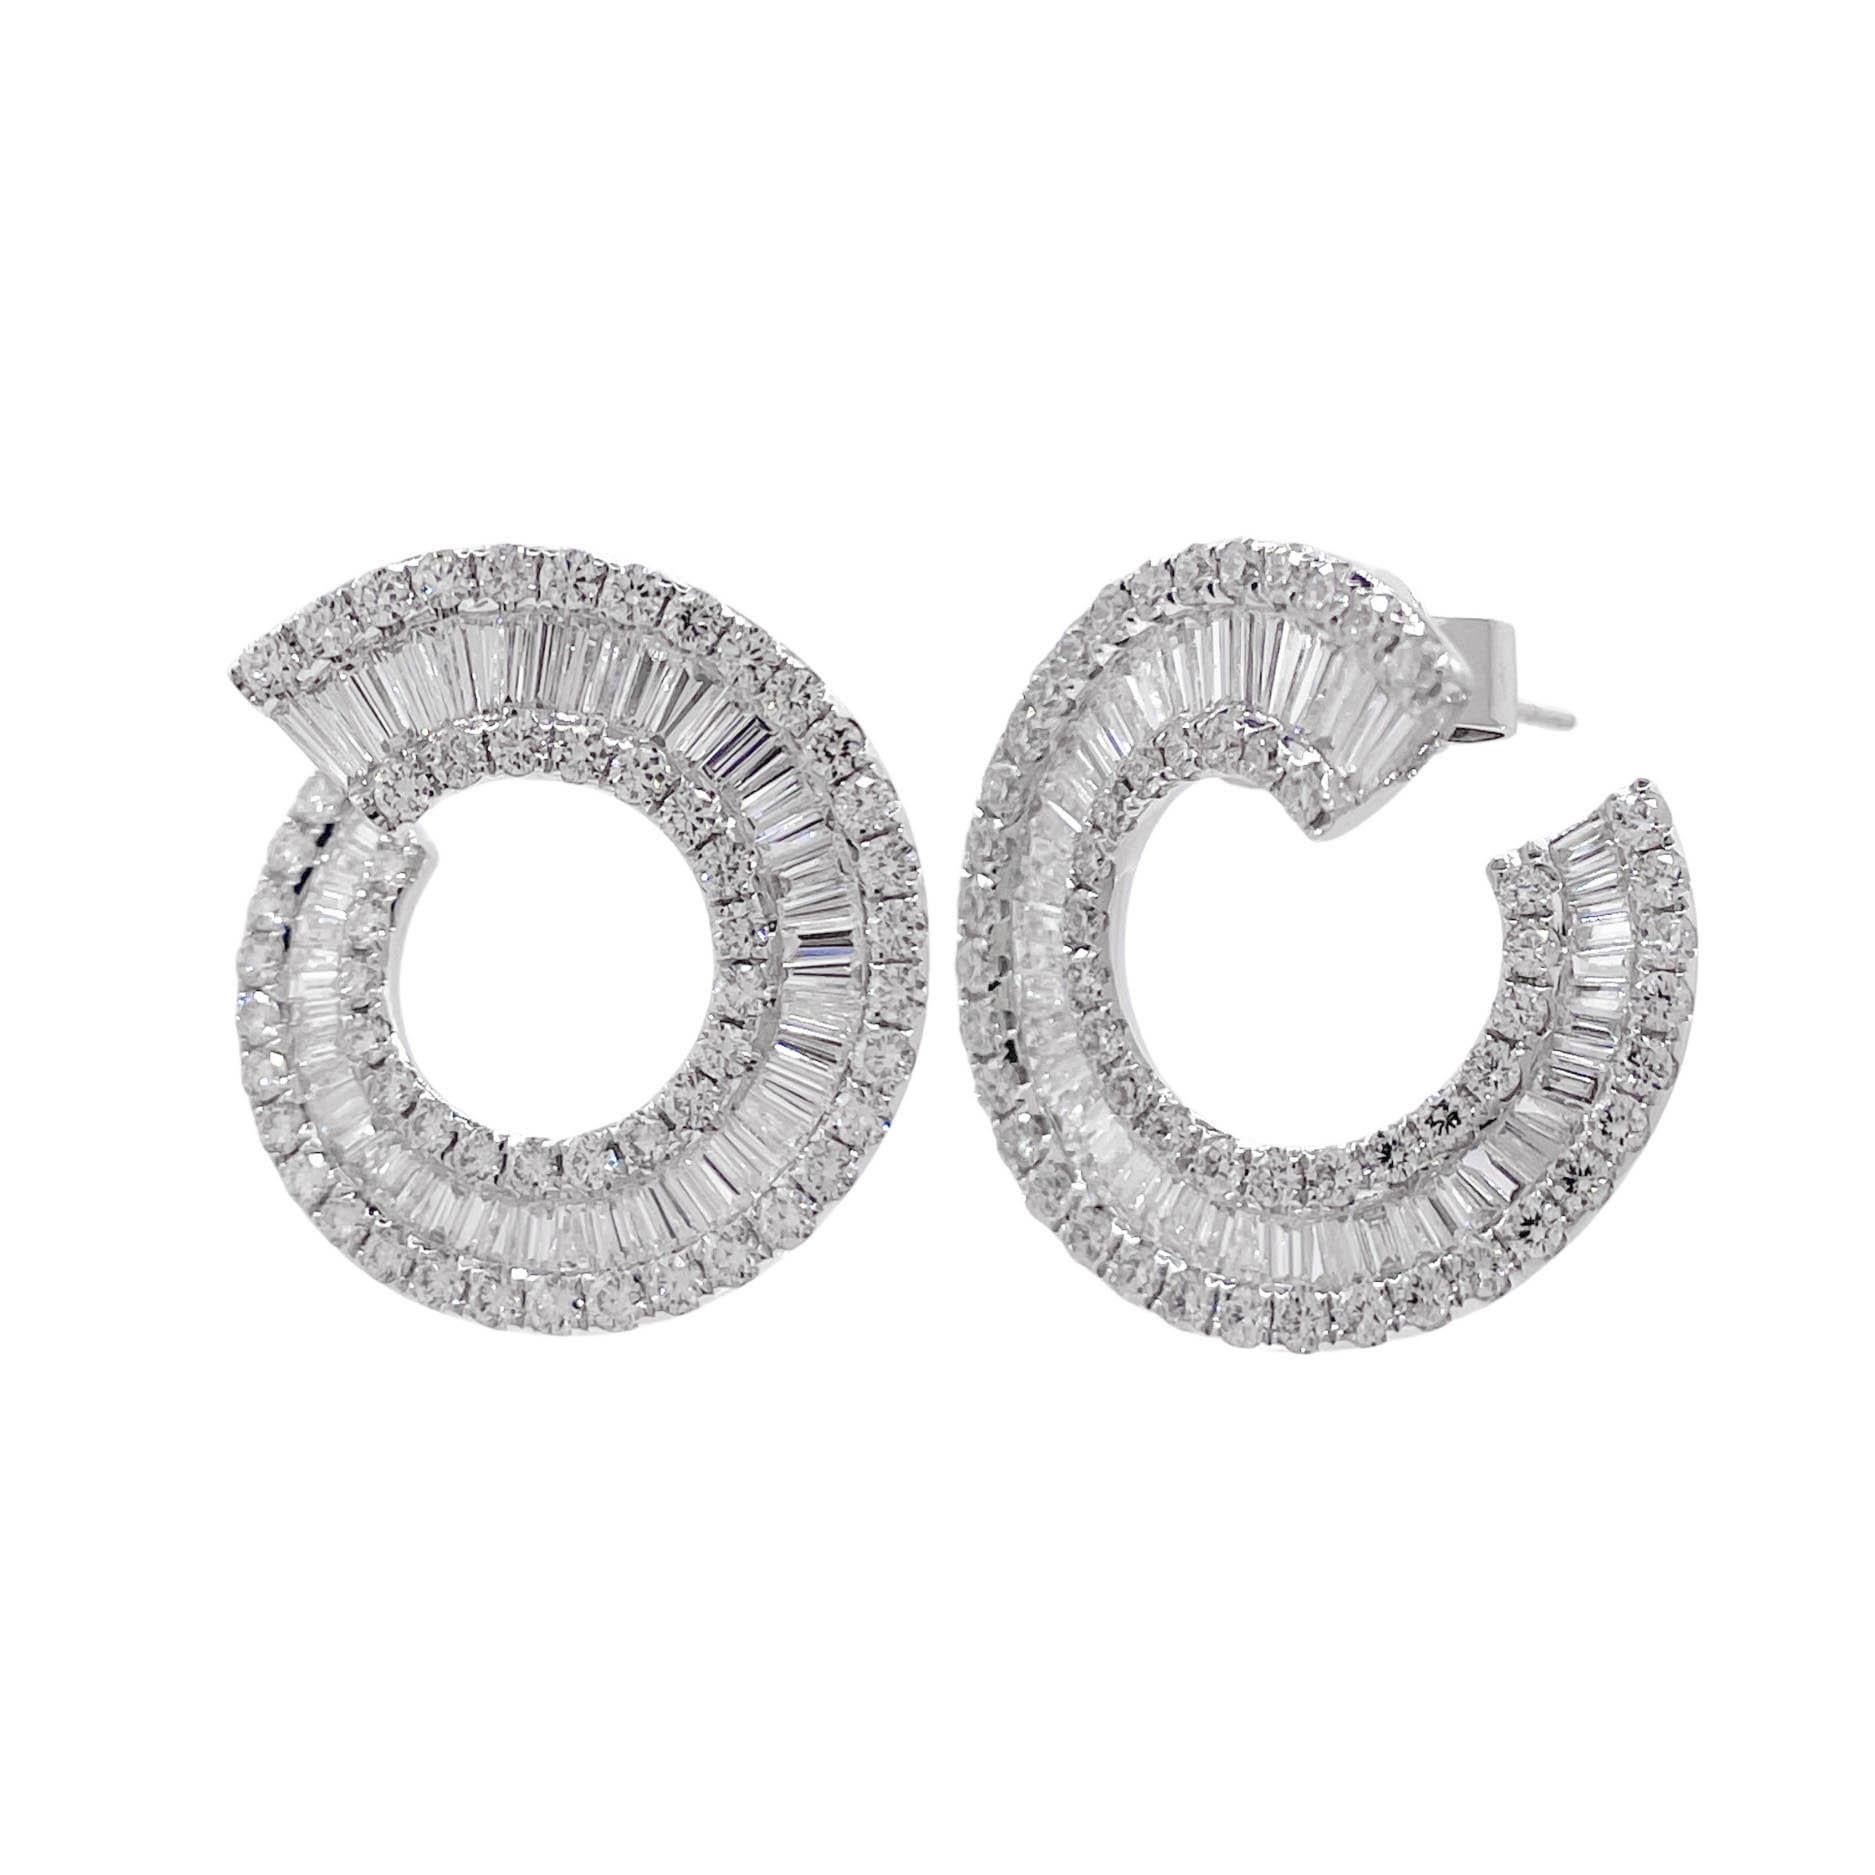 Mixed Cut Jay Feder 18k White Gold Diamond C Shaped Earrings For Sale